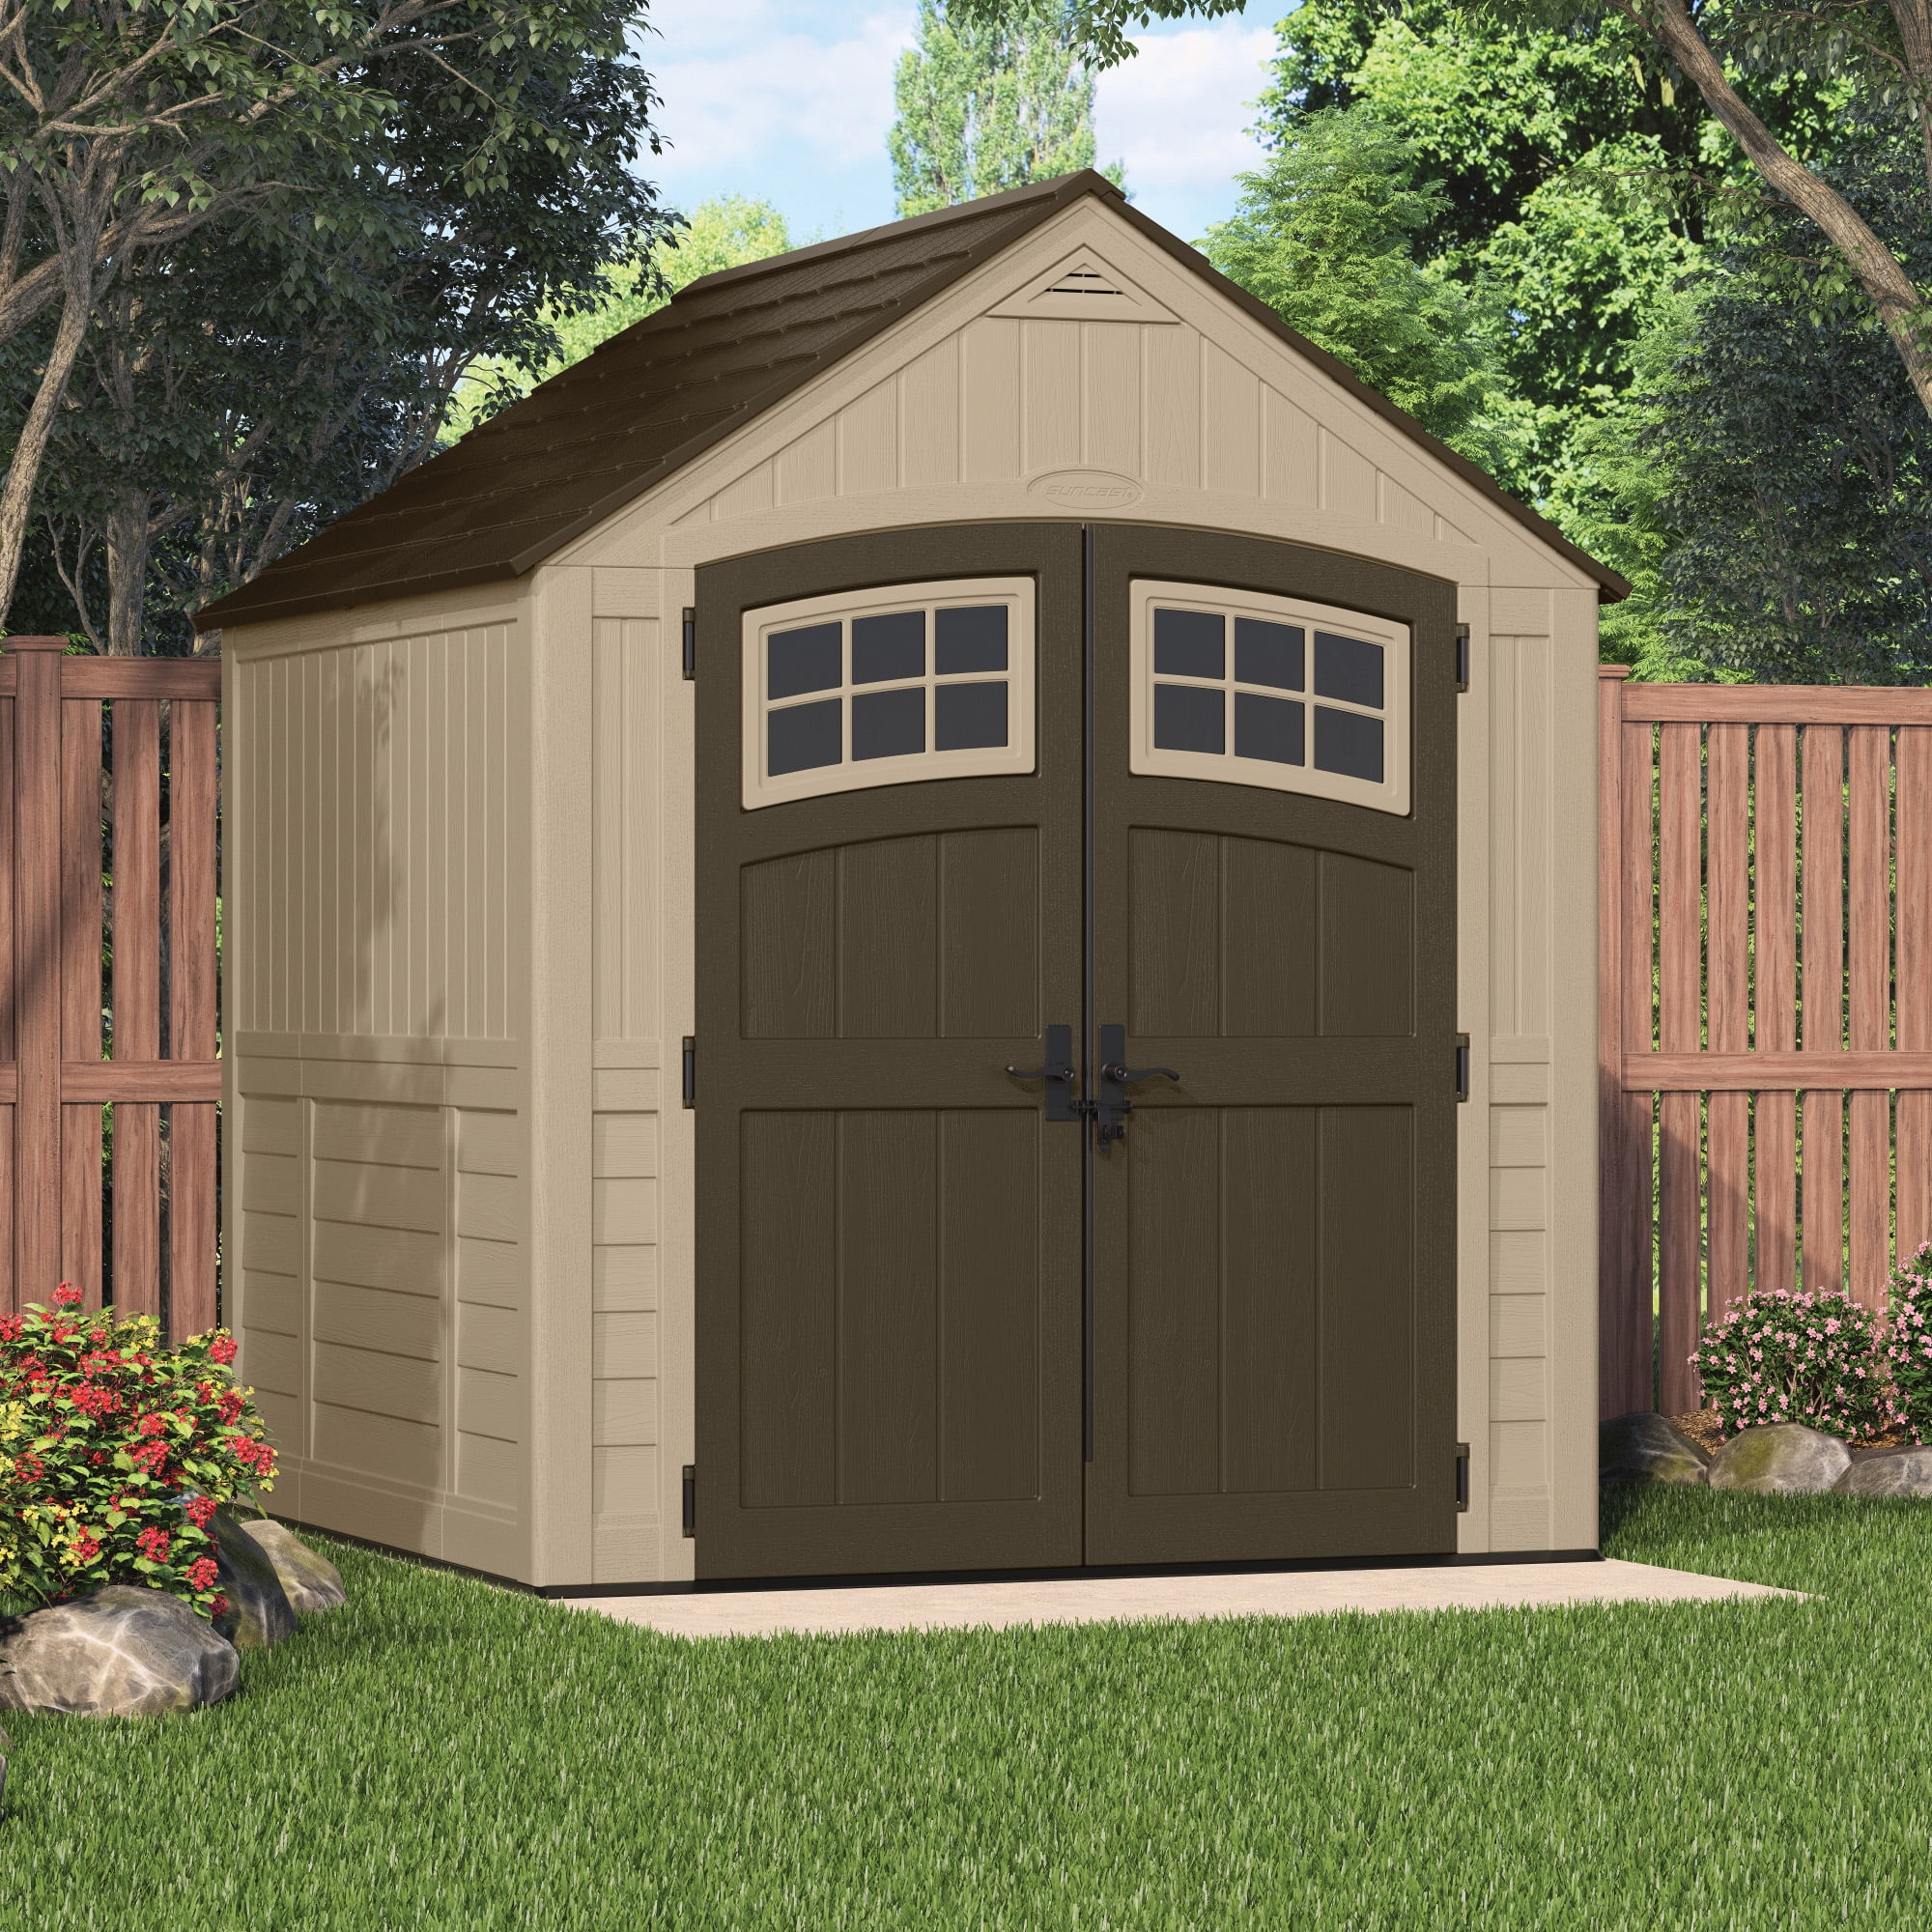 Suncast Sutton® Storage Shed for Backyard, Sand Brown, 7' x 7', 322 cu ...